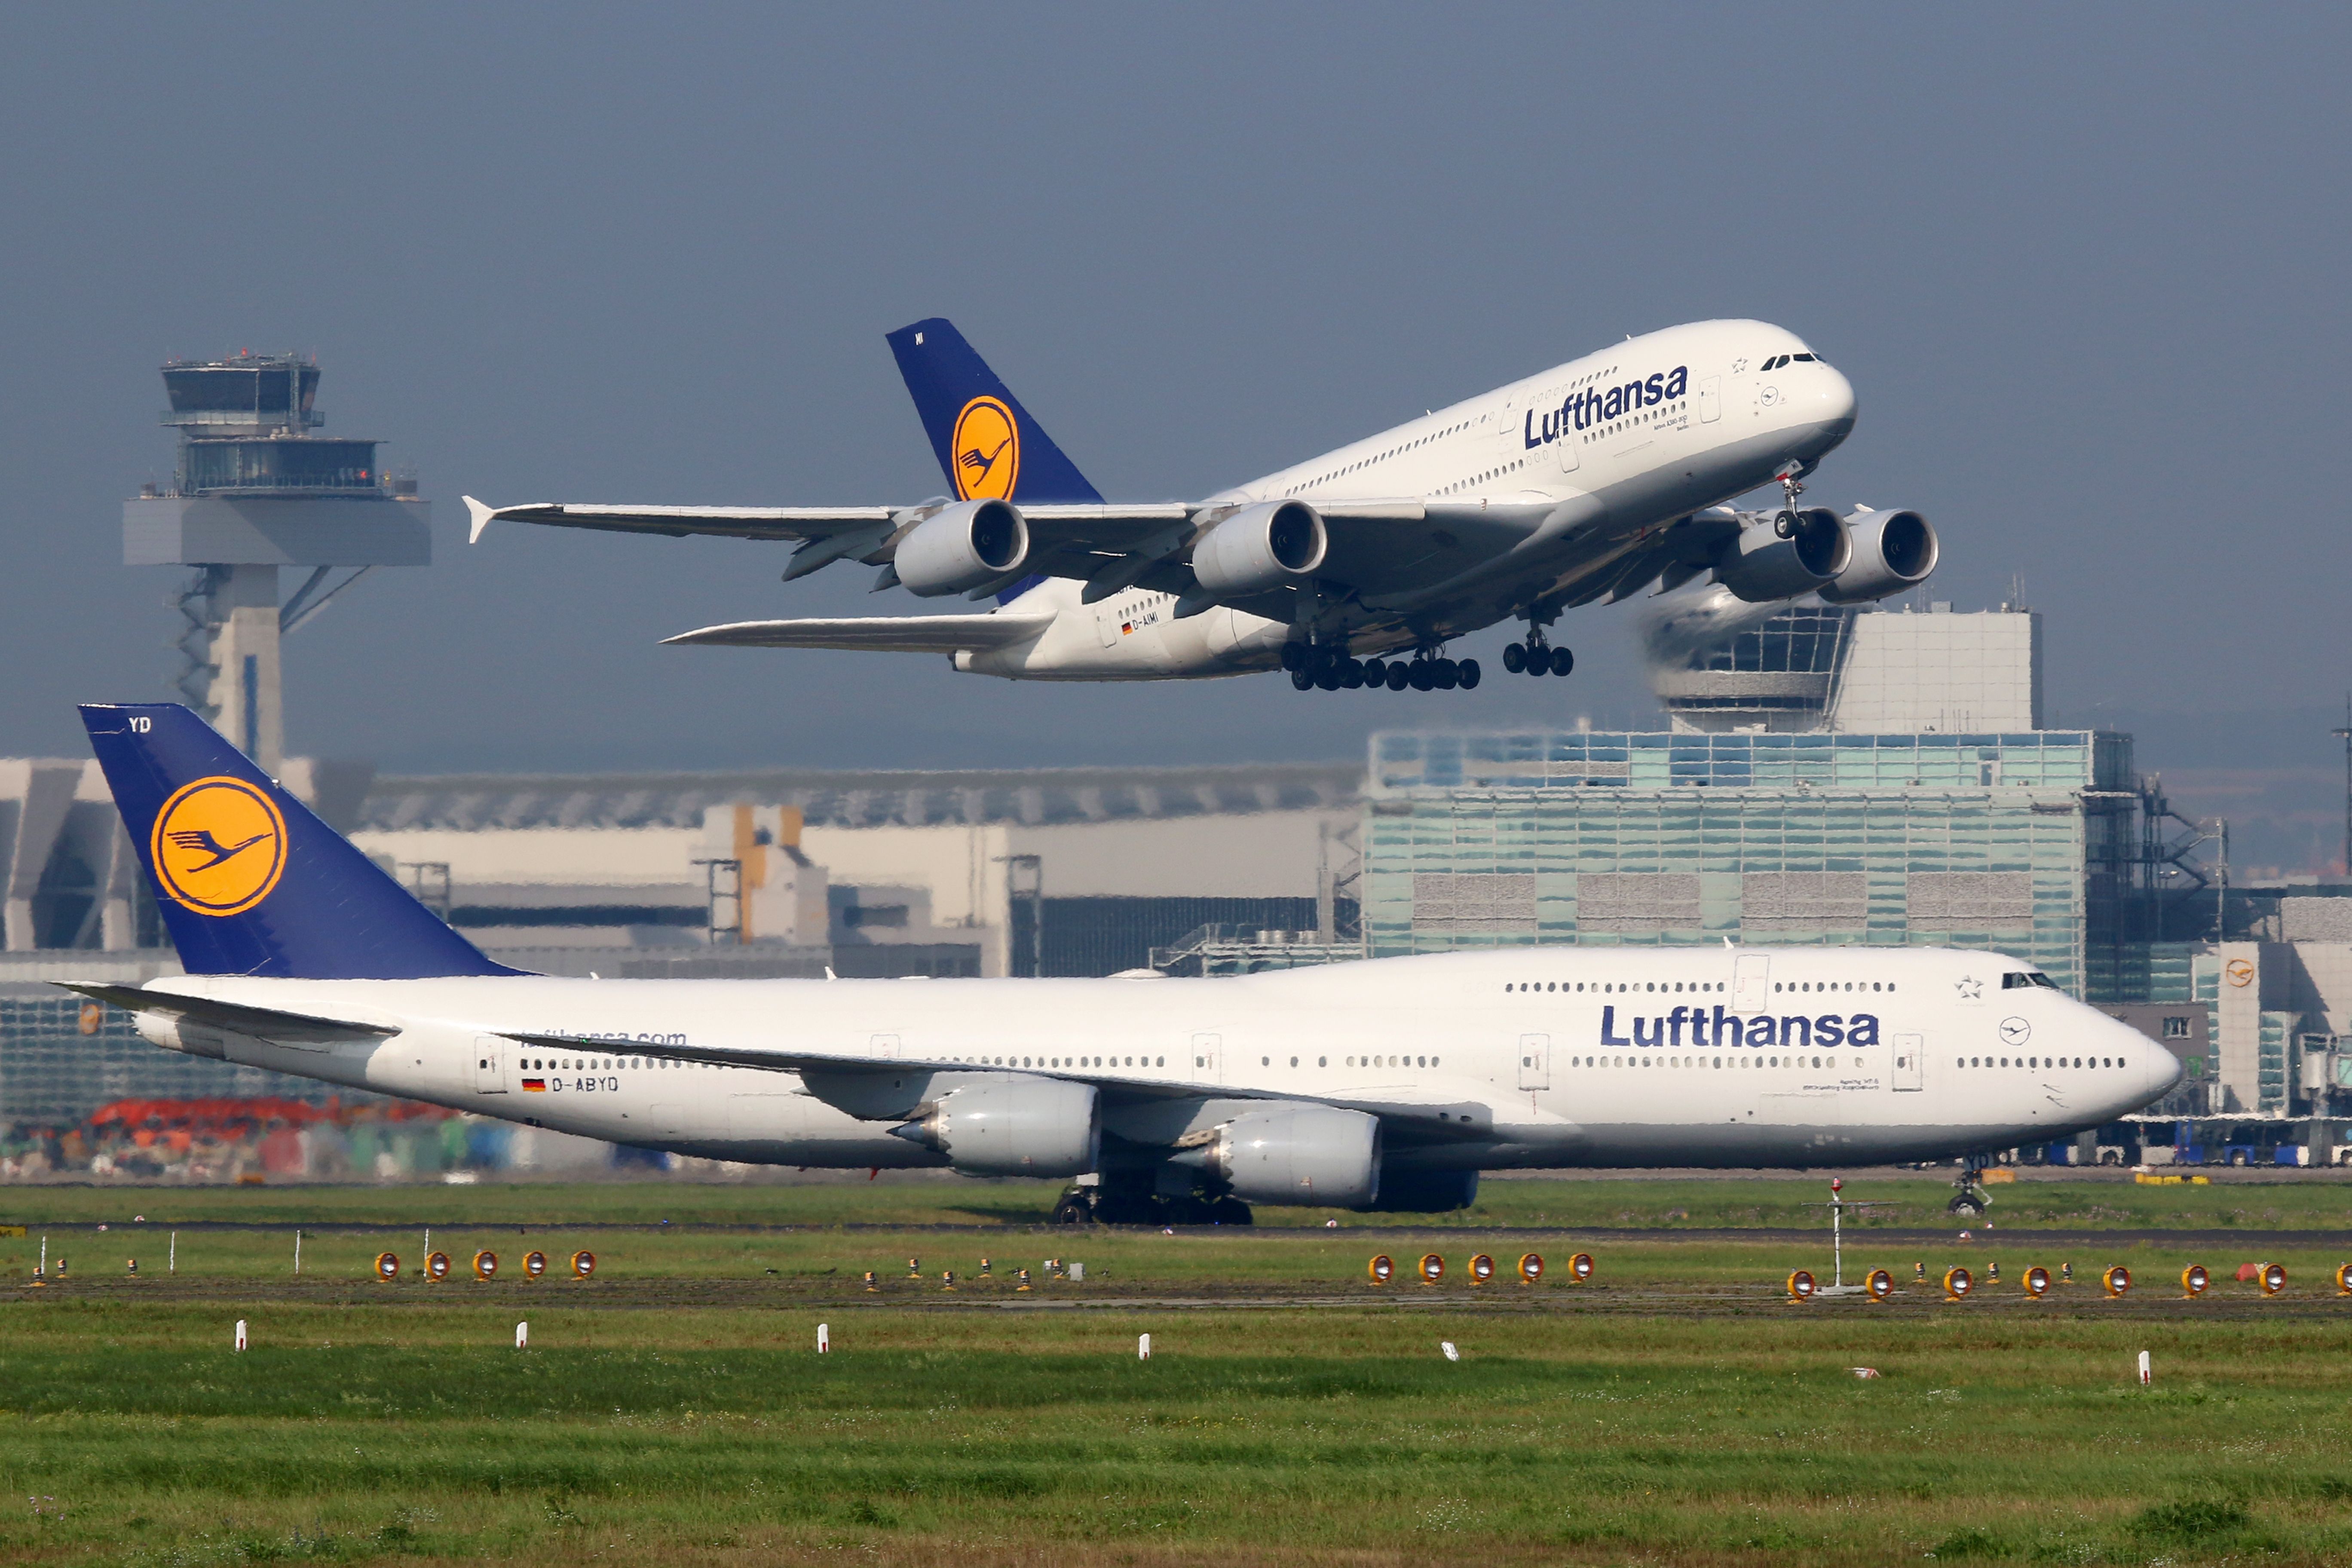 A Lufthansa B747 taxiing while a Lufthansa A380 takes off.